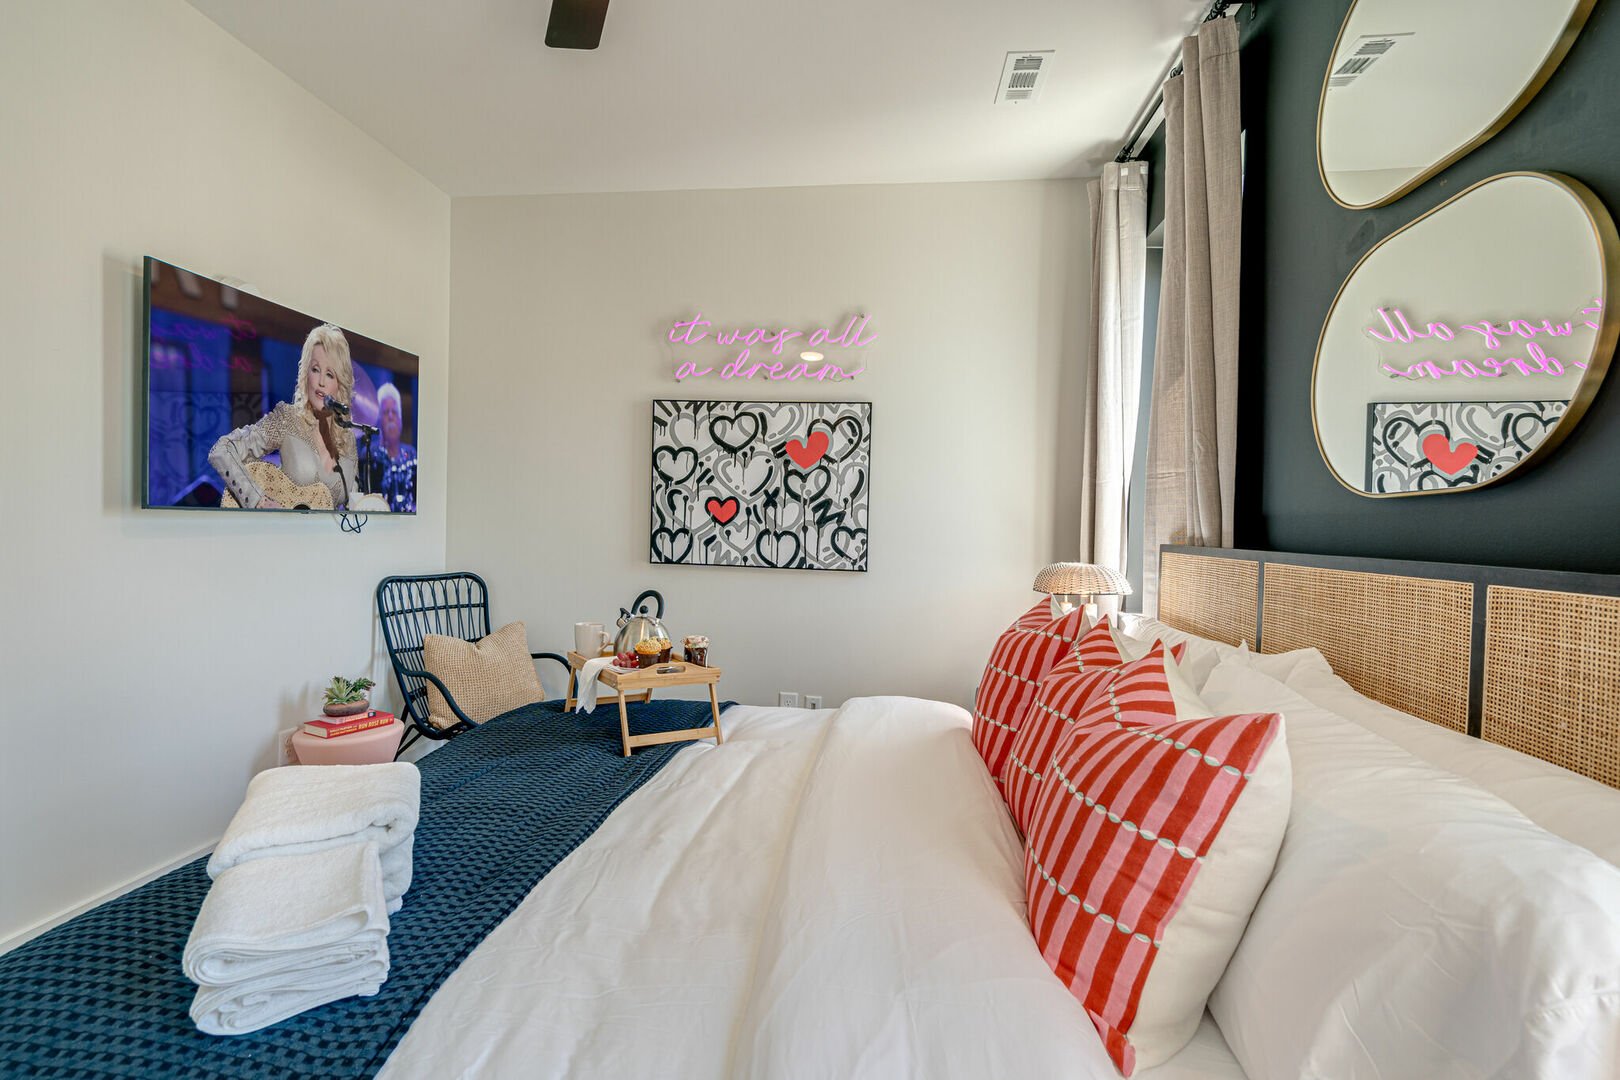 Primary bedroom with King bed, designer furnishings, smart TV, and en-suite bathroom.